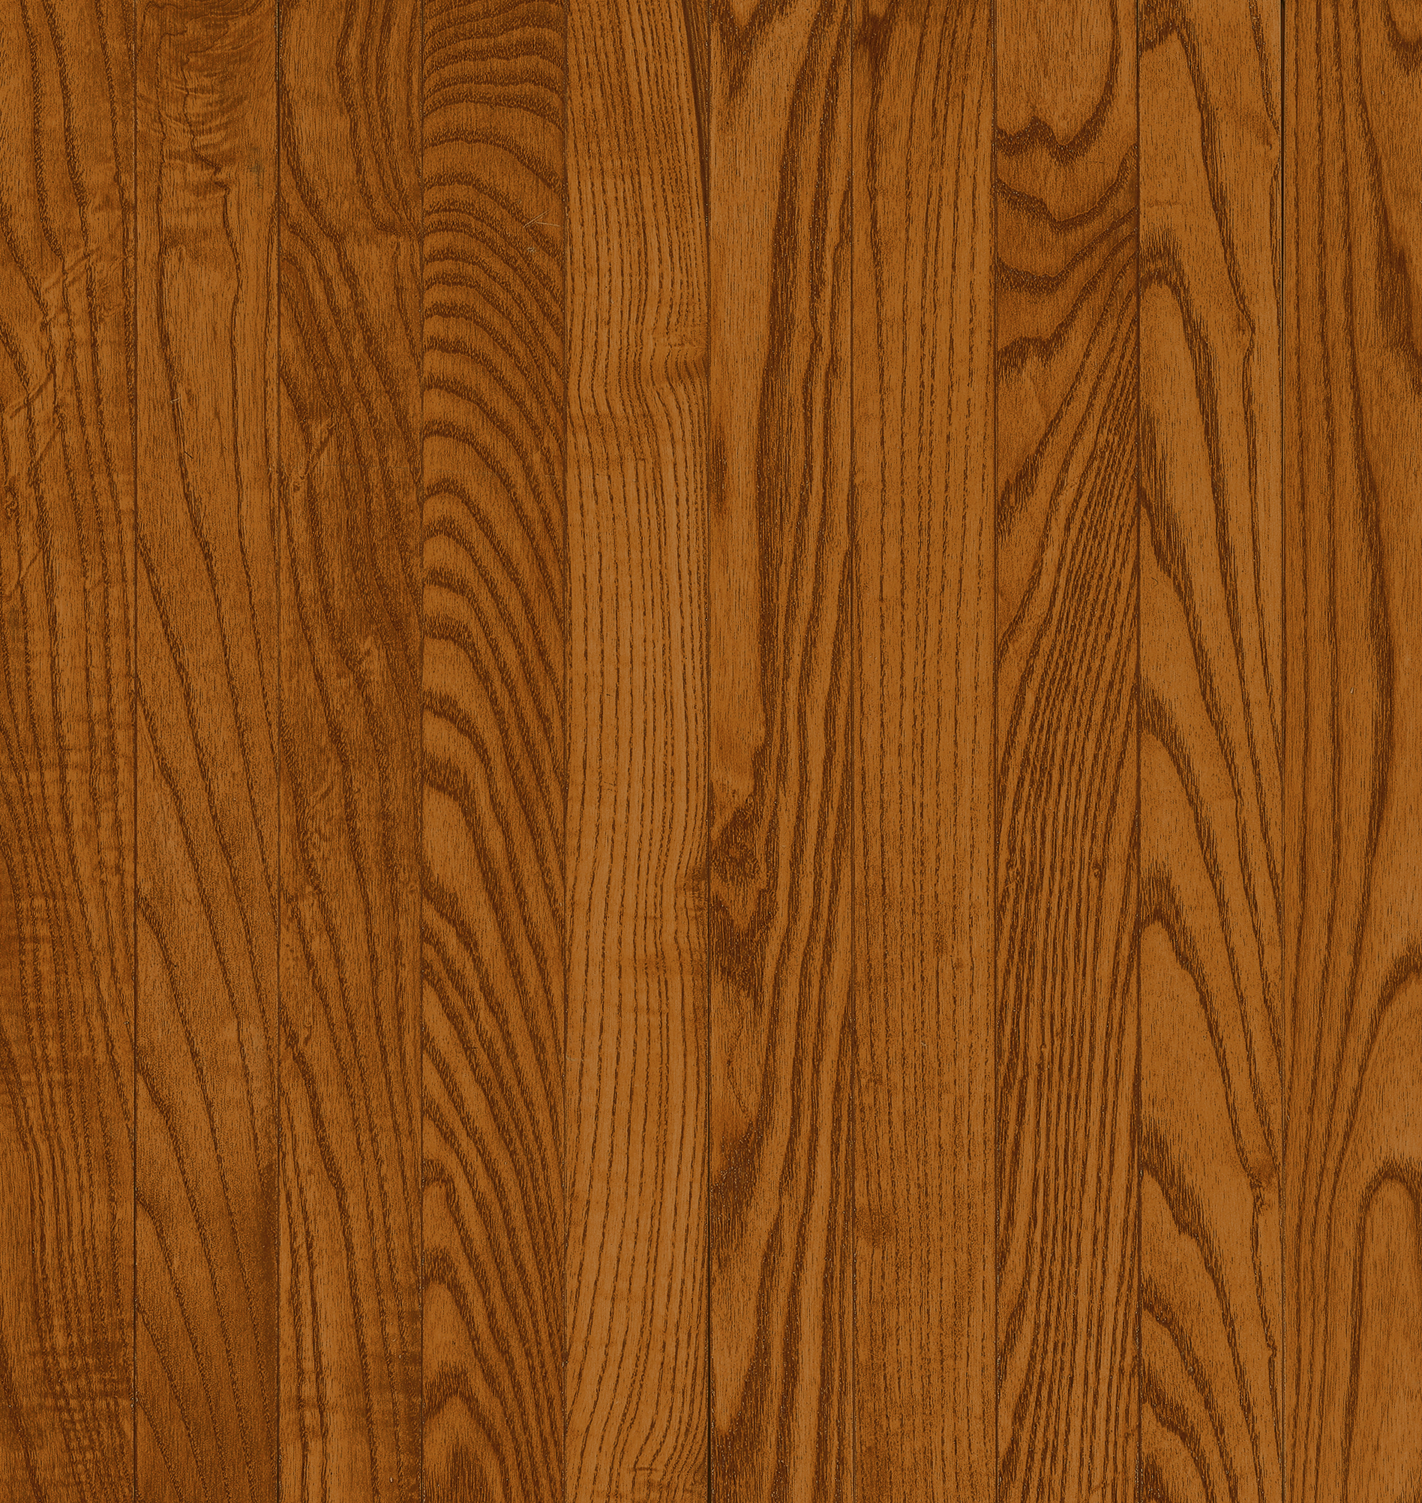 Oak Solid Hardwood Abc1401, Bruce 3 4 Inch Hardwood Flooring